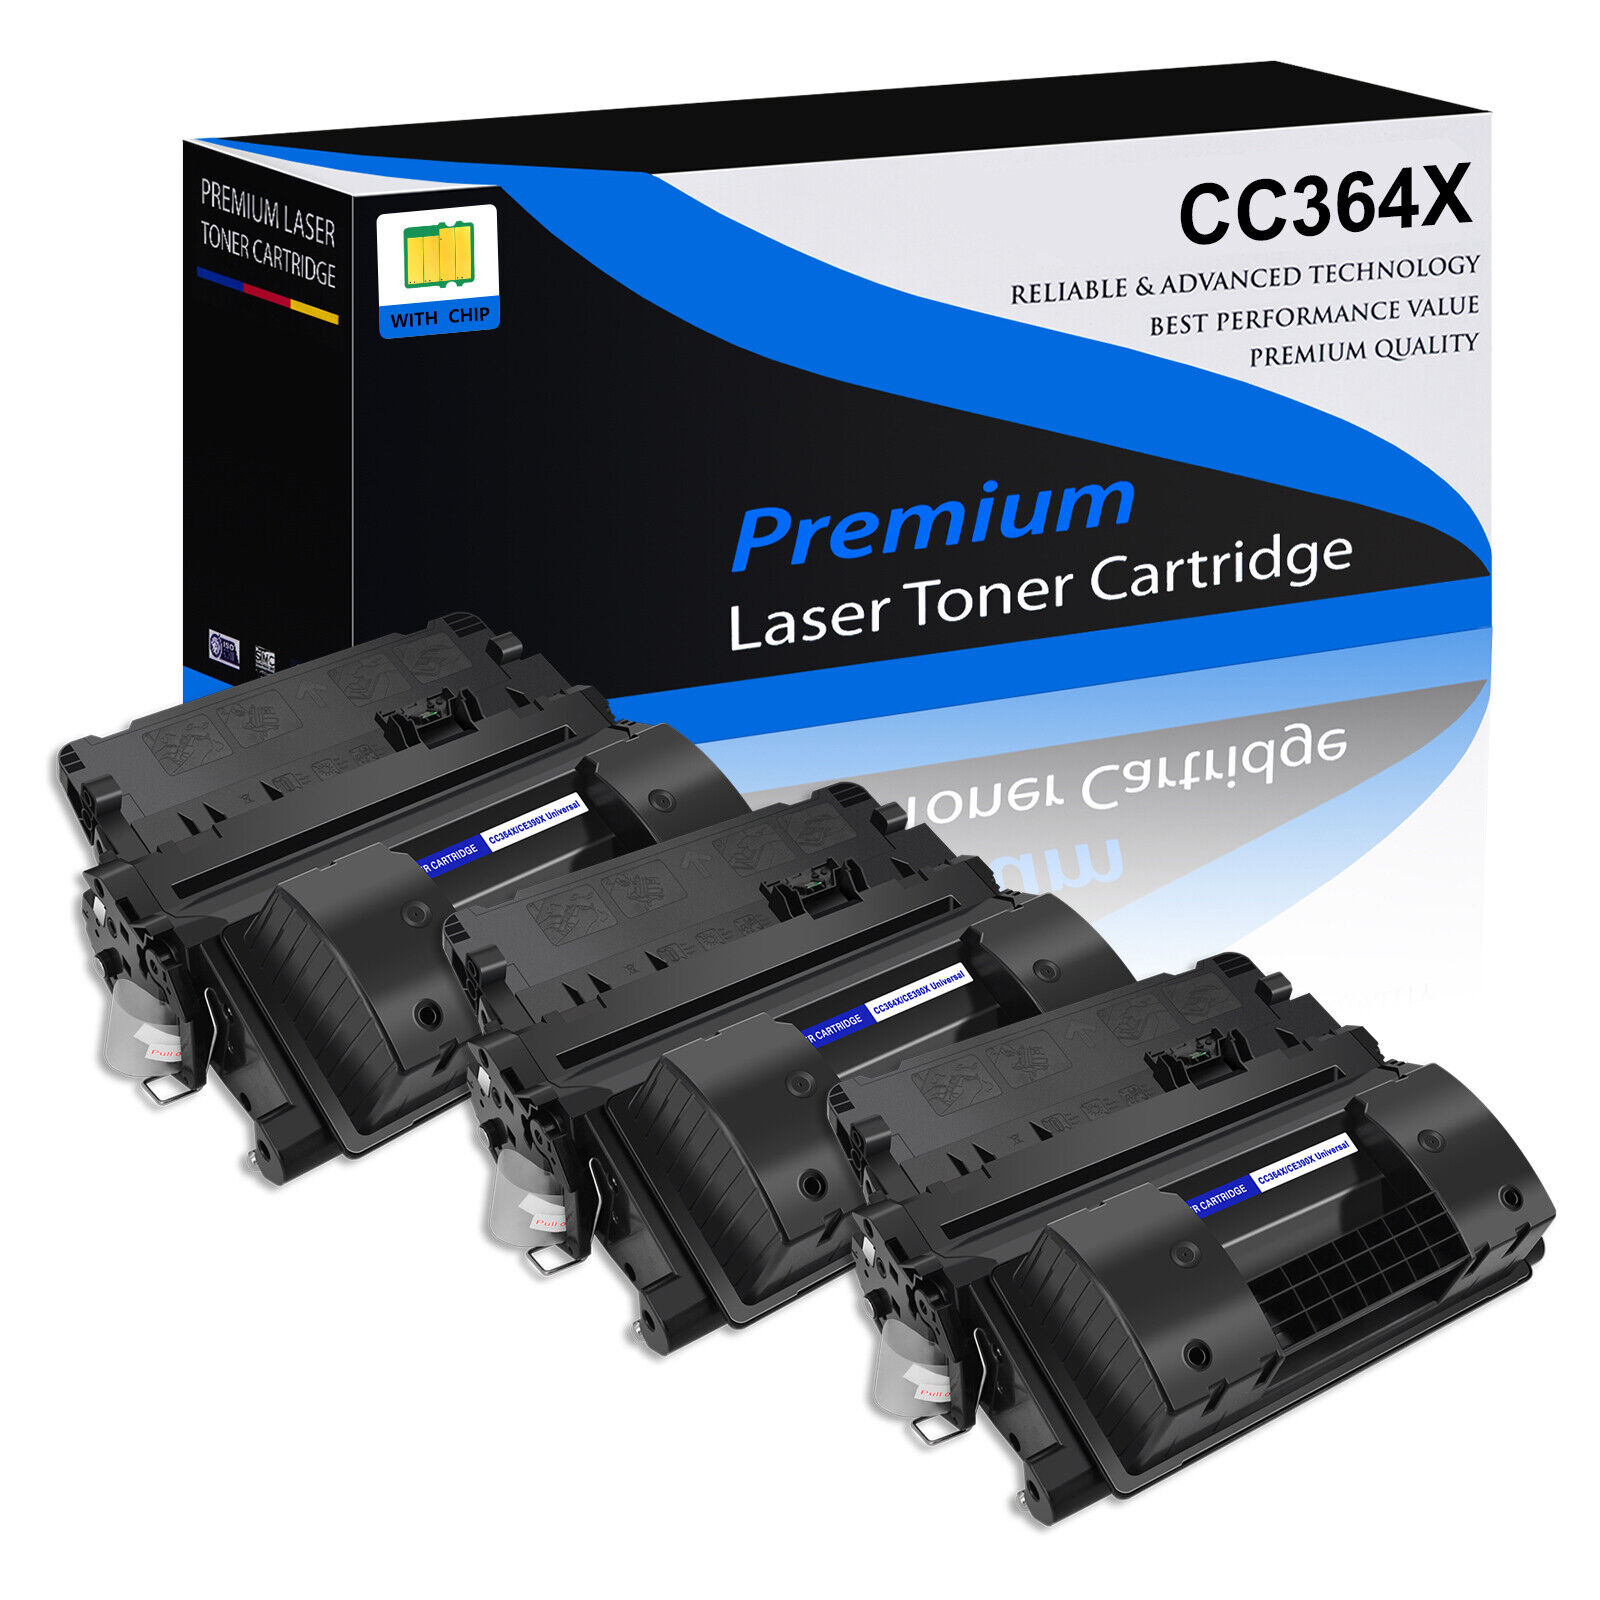 3 PACK - Black CC364X 64X Toner Cartridge For HP LaserJet P4015dn P4015n P4015tn